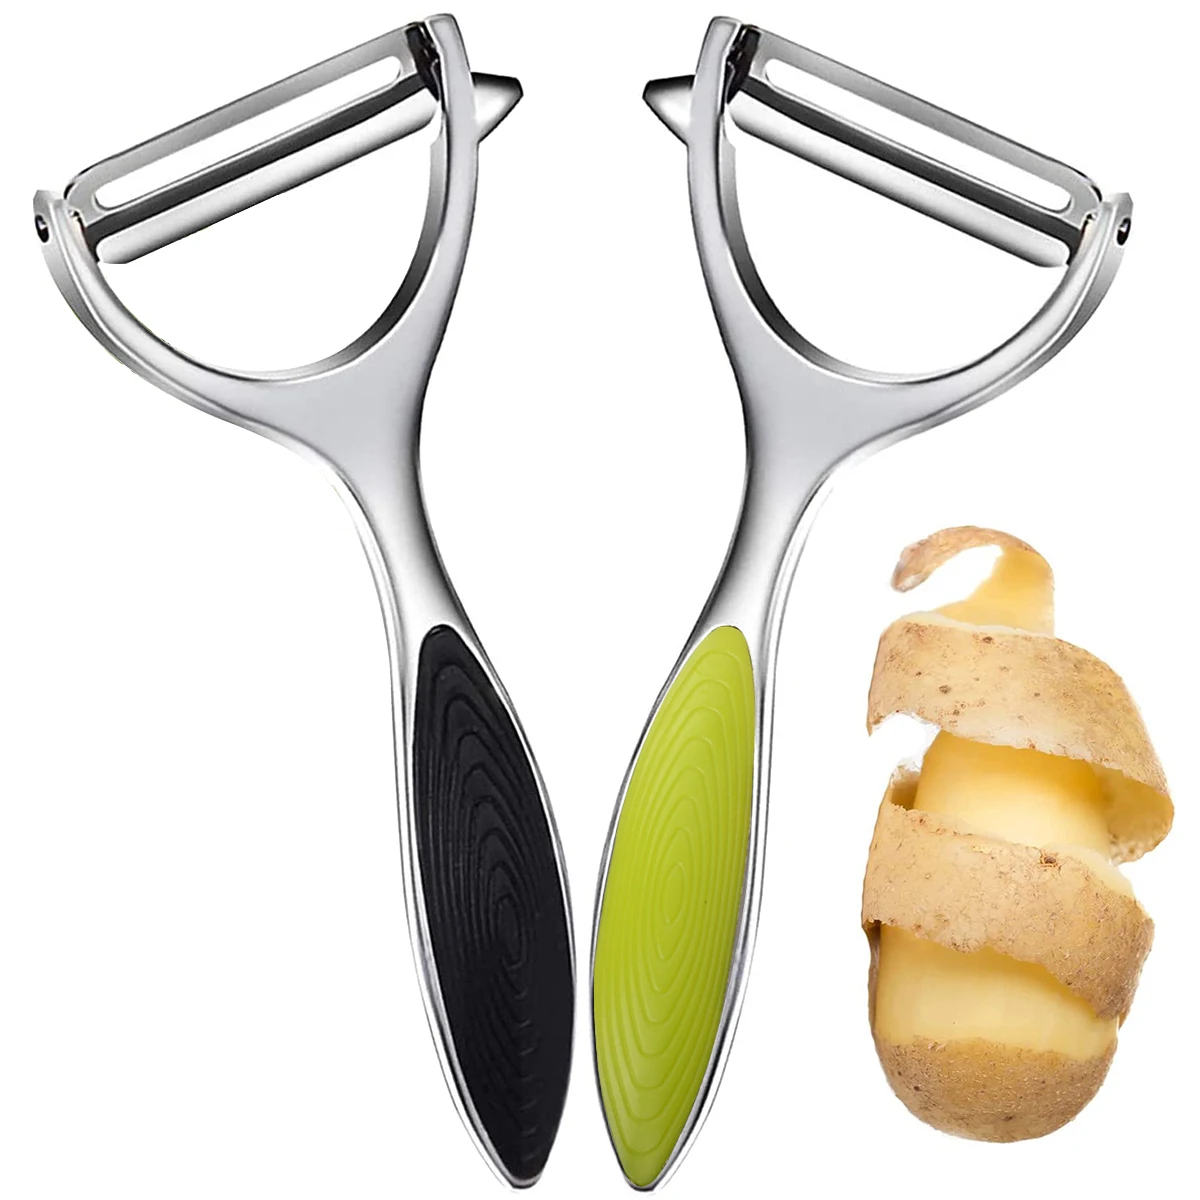 https://ae01.alicdn.com/kf/S3711fd86be914909b5dc18edcc0c8aaft/Potato-Peelers-Vegetable-Peeler-304-Stainless-Steel-Y-Shaped-Rotatable-Fruits-Peeler-Peeling-Tool-for-Kitchen.jpg